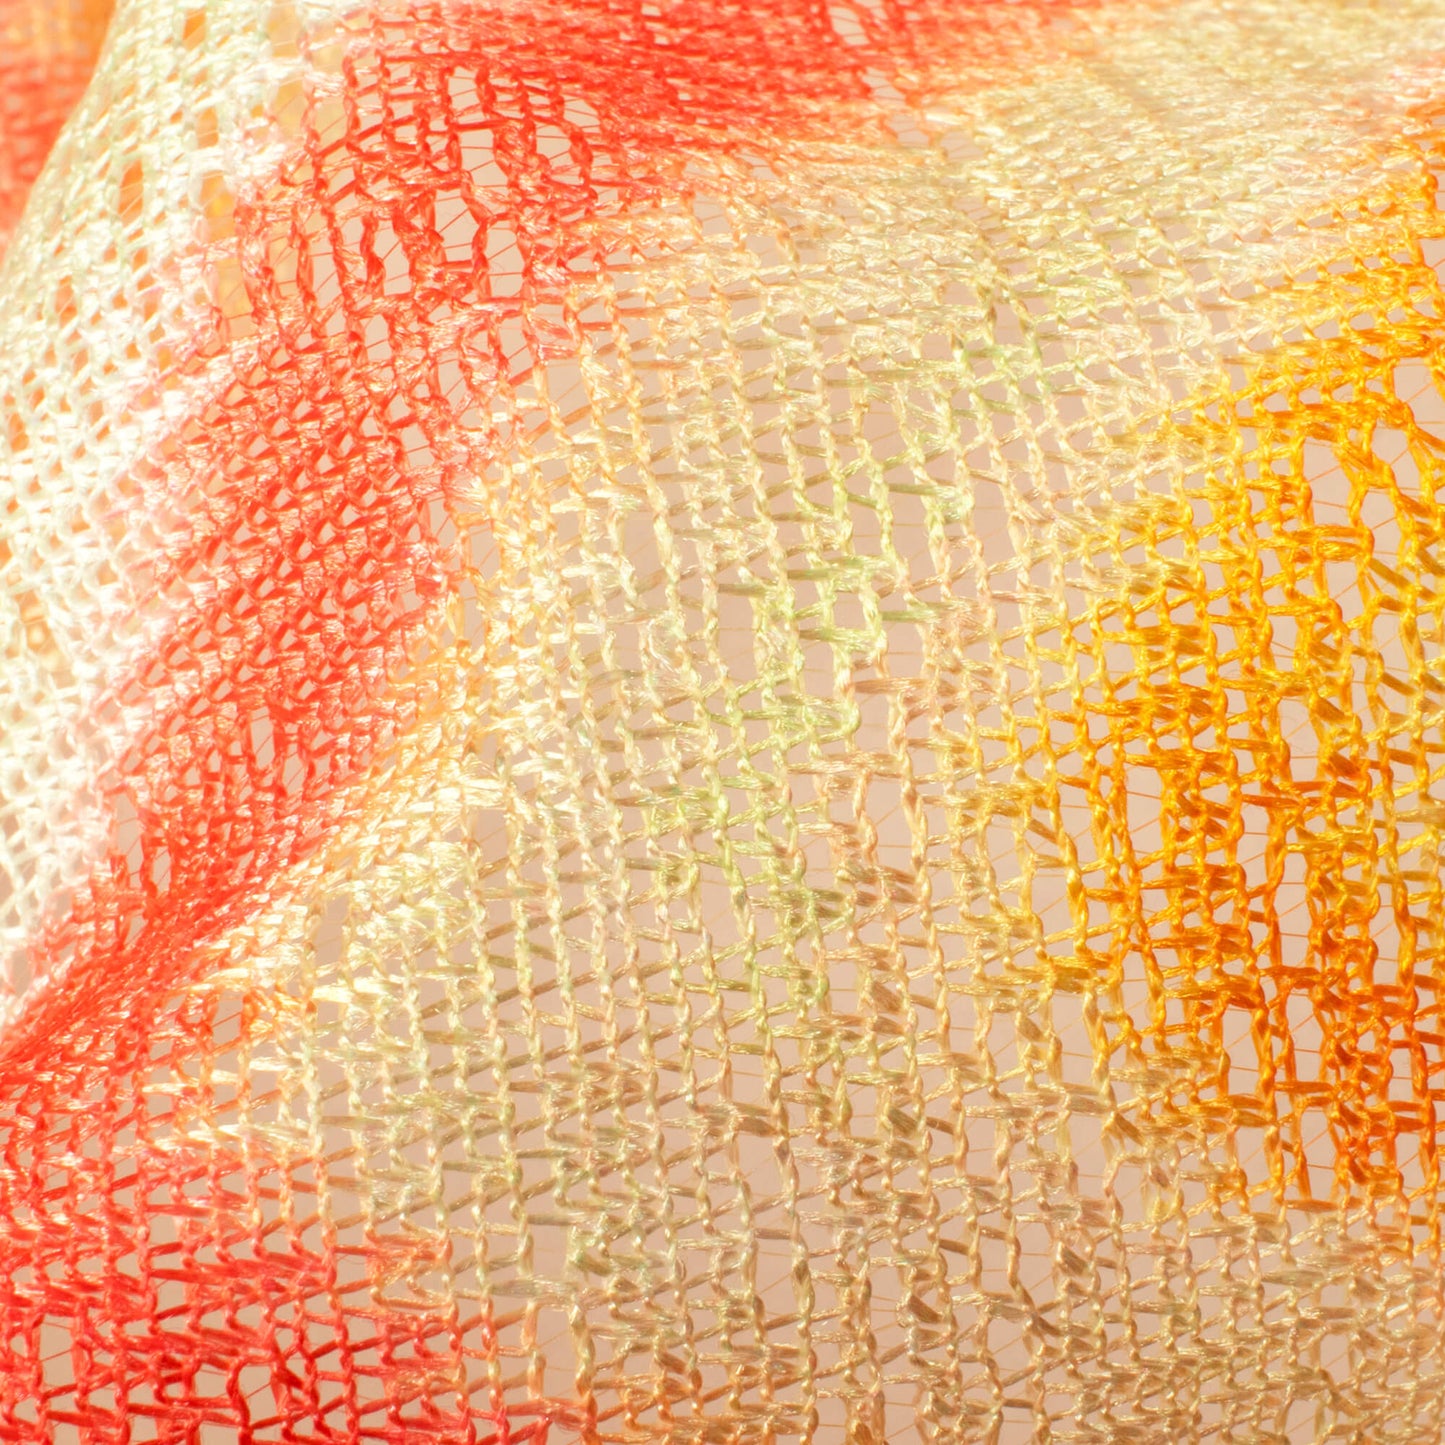 Salmon Pink And Pale Yellow Chevron Pattern Digital Print Raschel Net Fabric (Width 58 Inches)